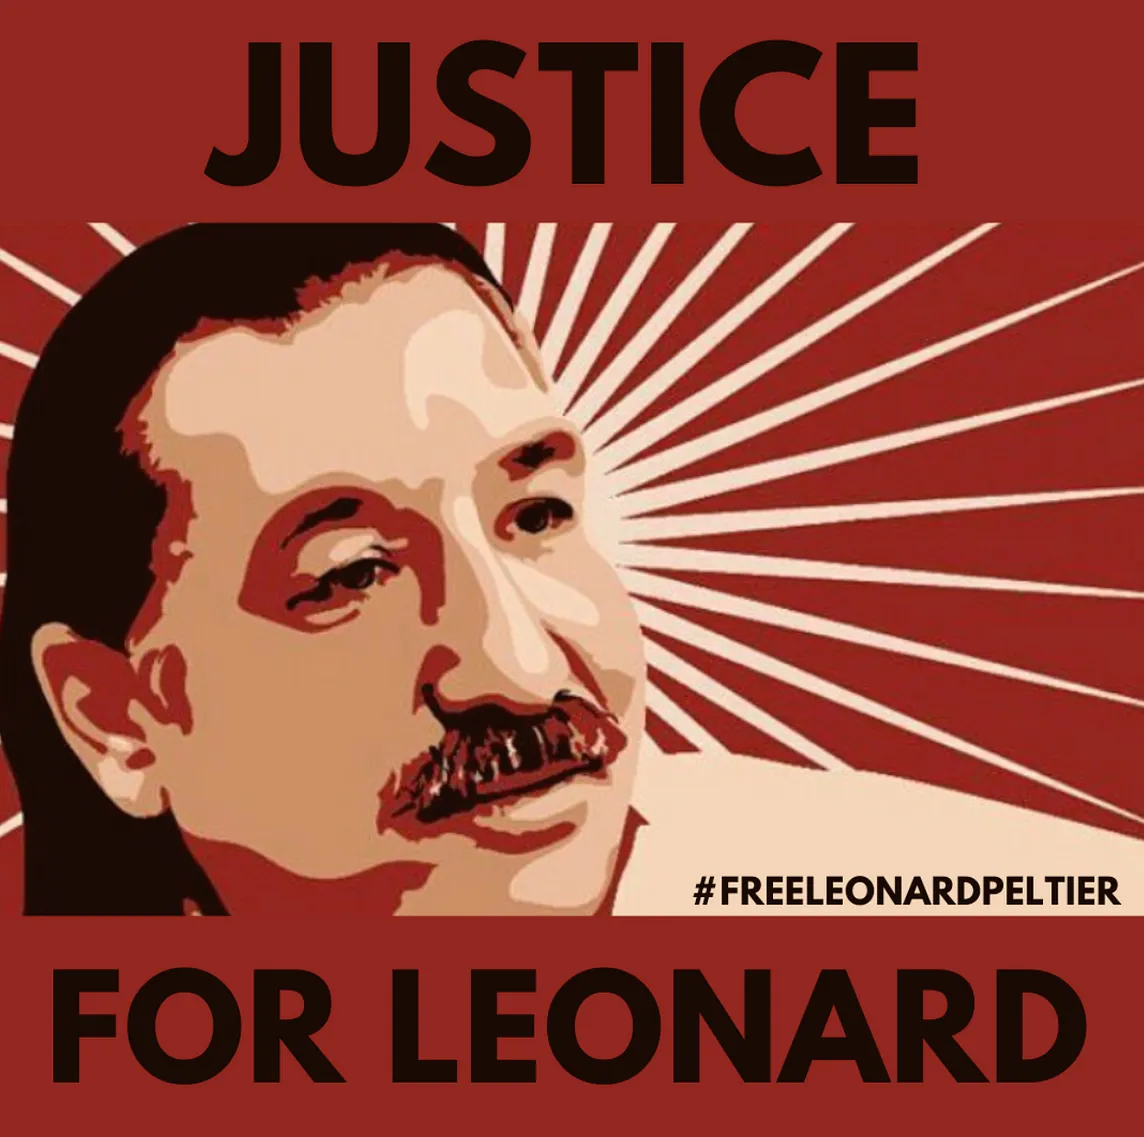 Political Prisoner Leonard Peltier is Innocent